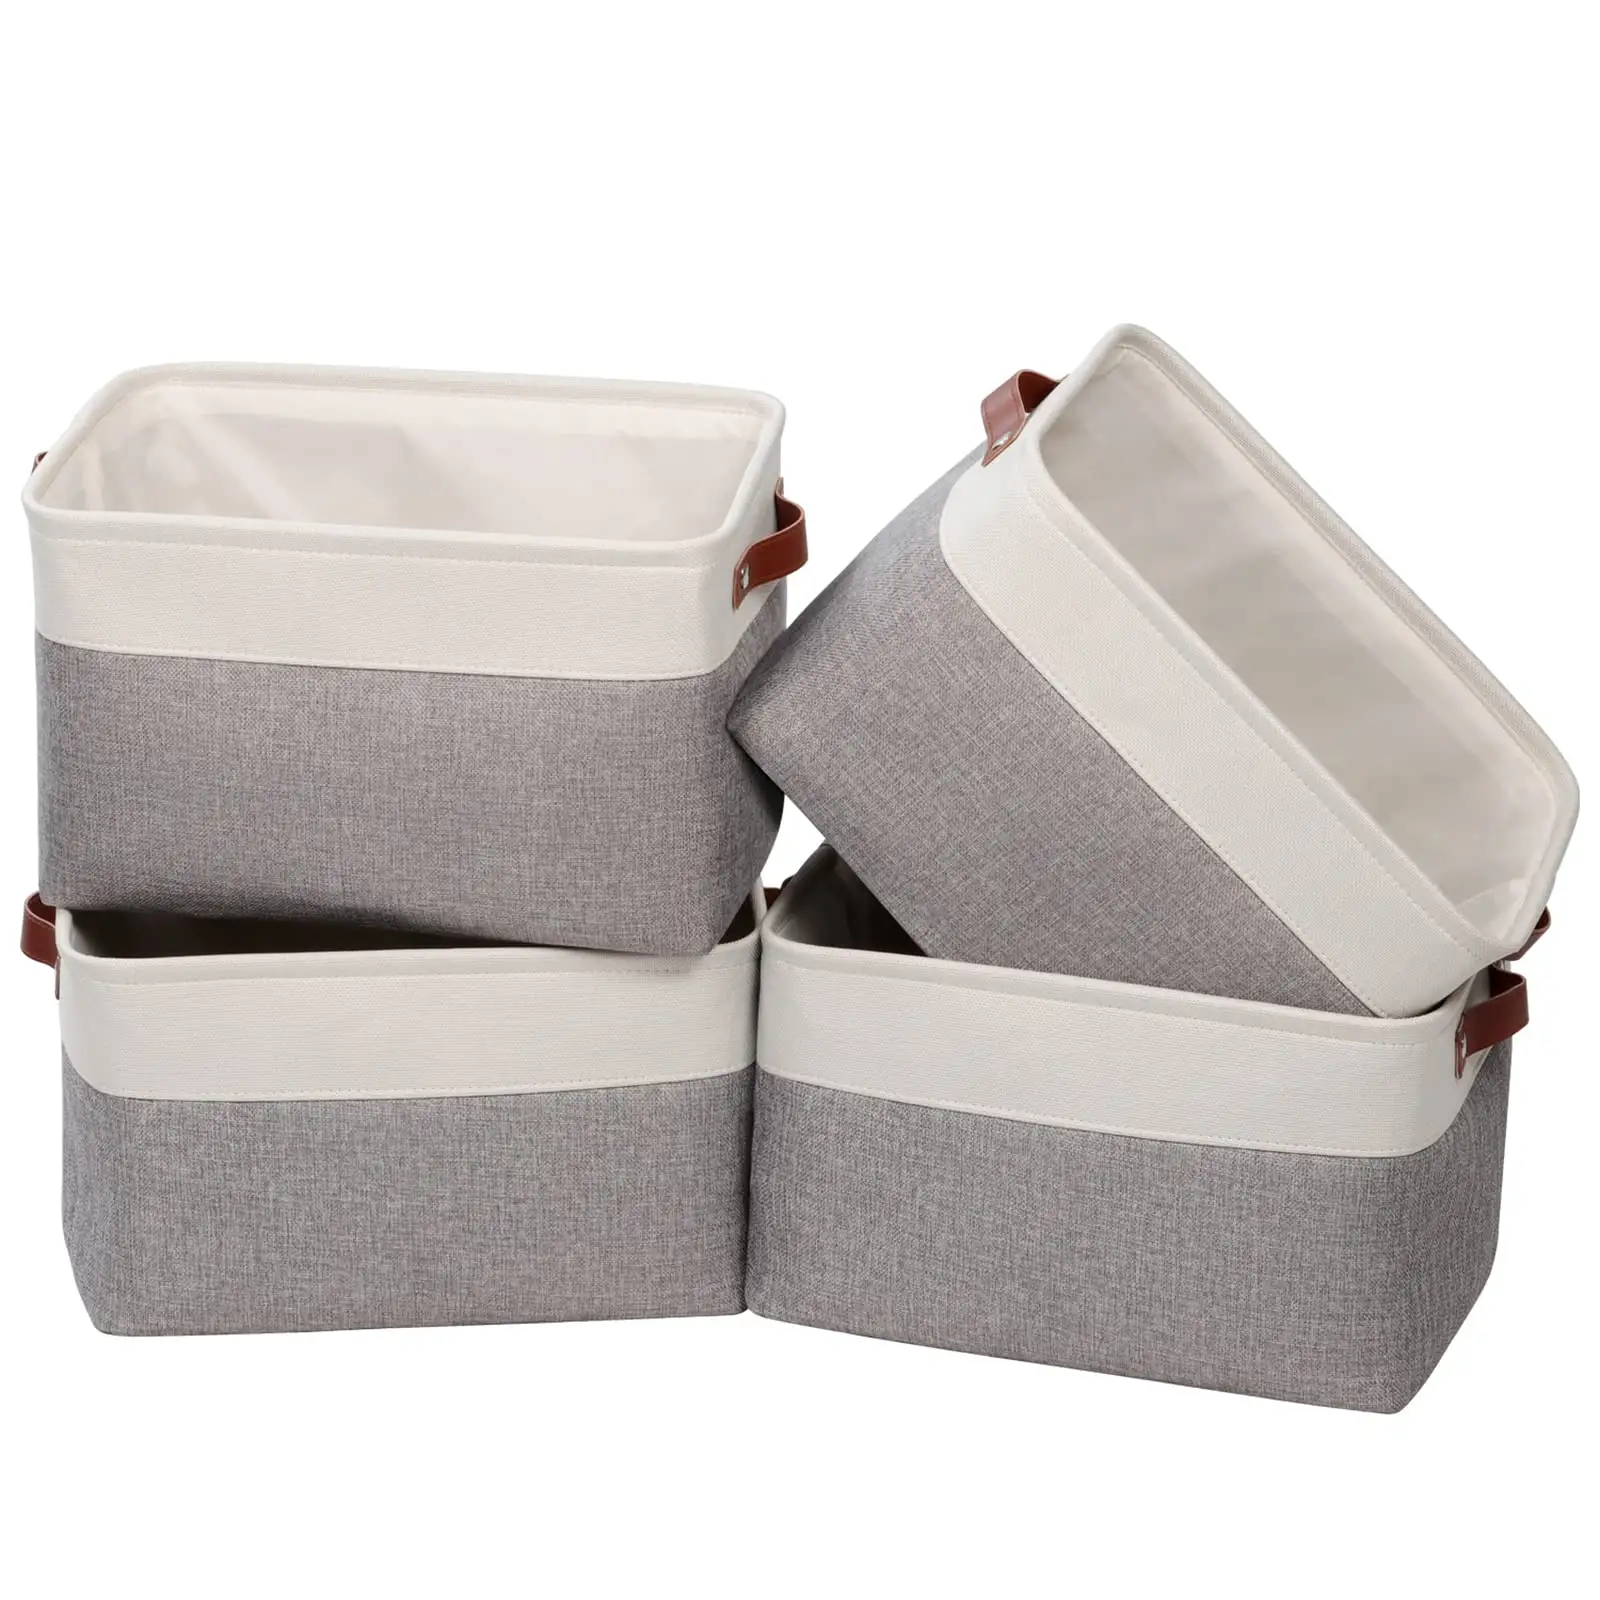 Foldable Children Clothing Organizers Boxs Household Folding Collapsible Fabric Wardrobe Storage Bins Basket with Bottom Base